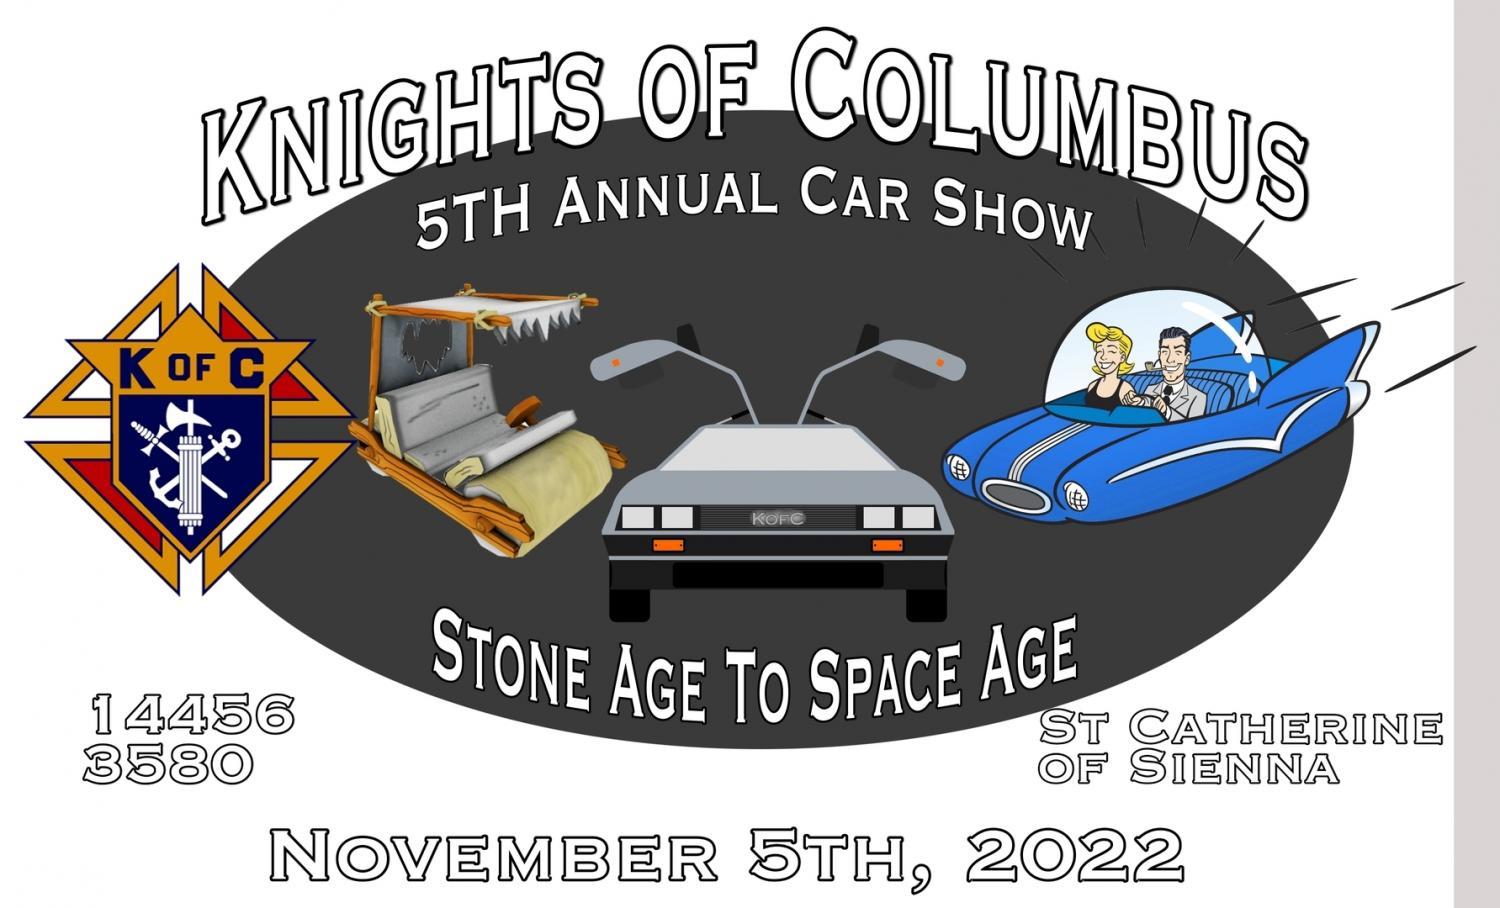 CAR SHOW Clearwater Knights of Columbus 5th Annual
Sat Nov 5, 9:00 AM - Sat Nov 5, 2:00 PM